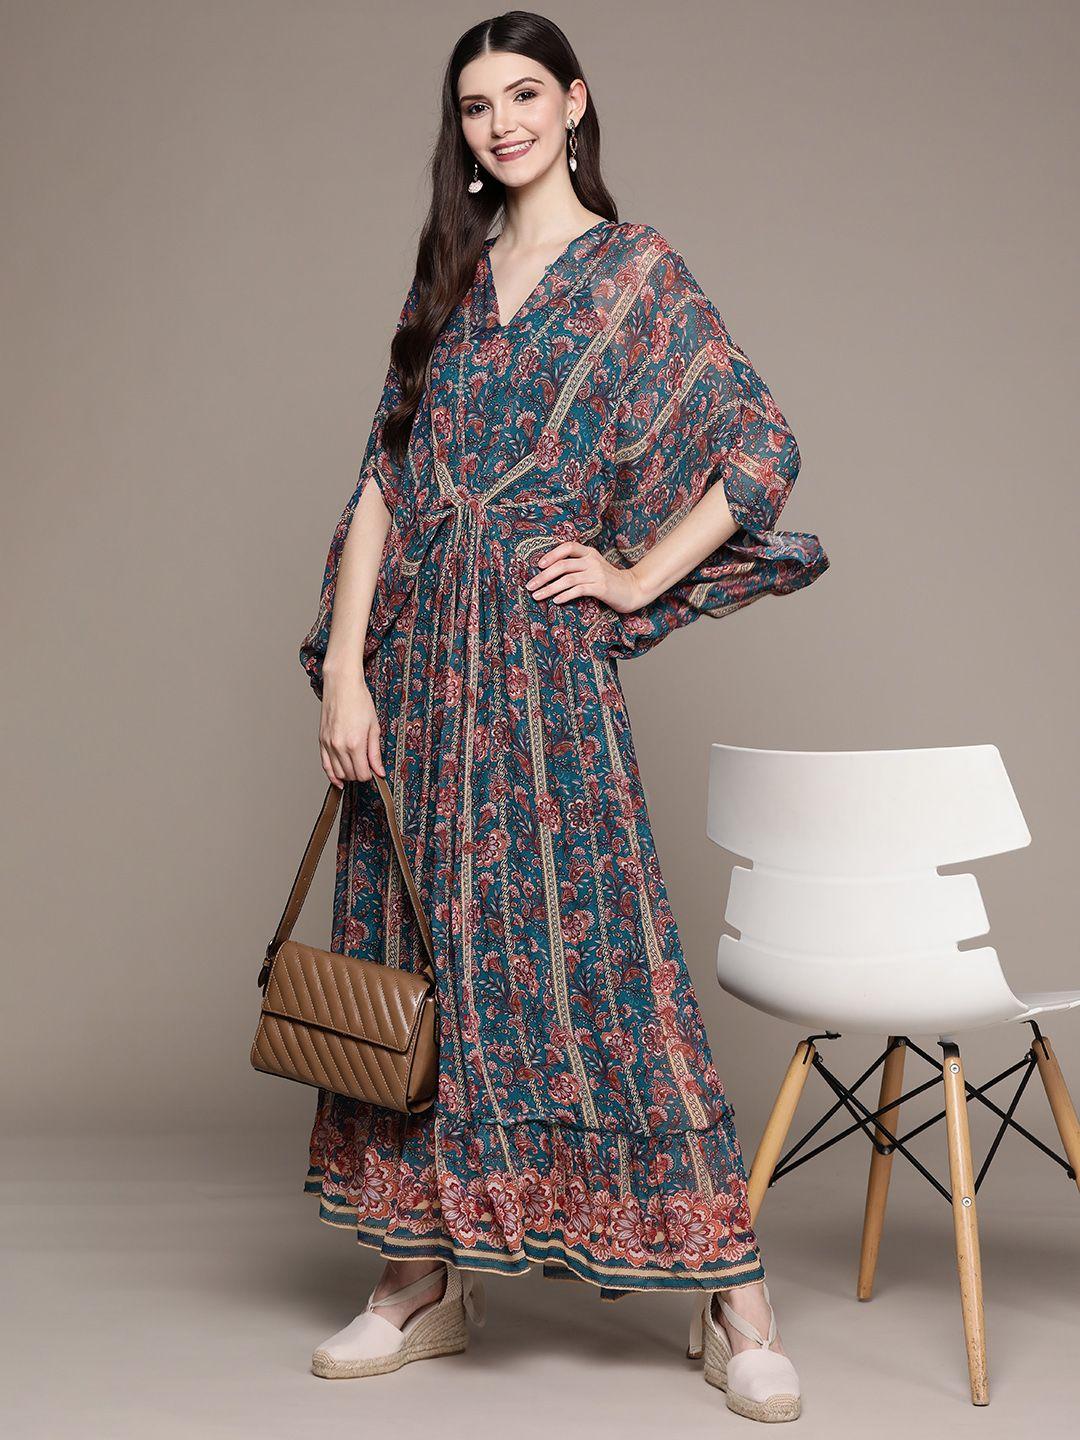 aarke ritu kumar teal & maroon ethnic motifs georgette maxi dress